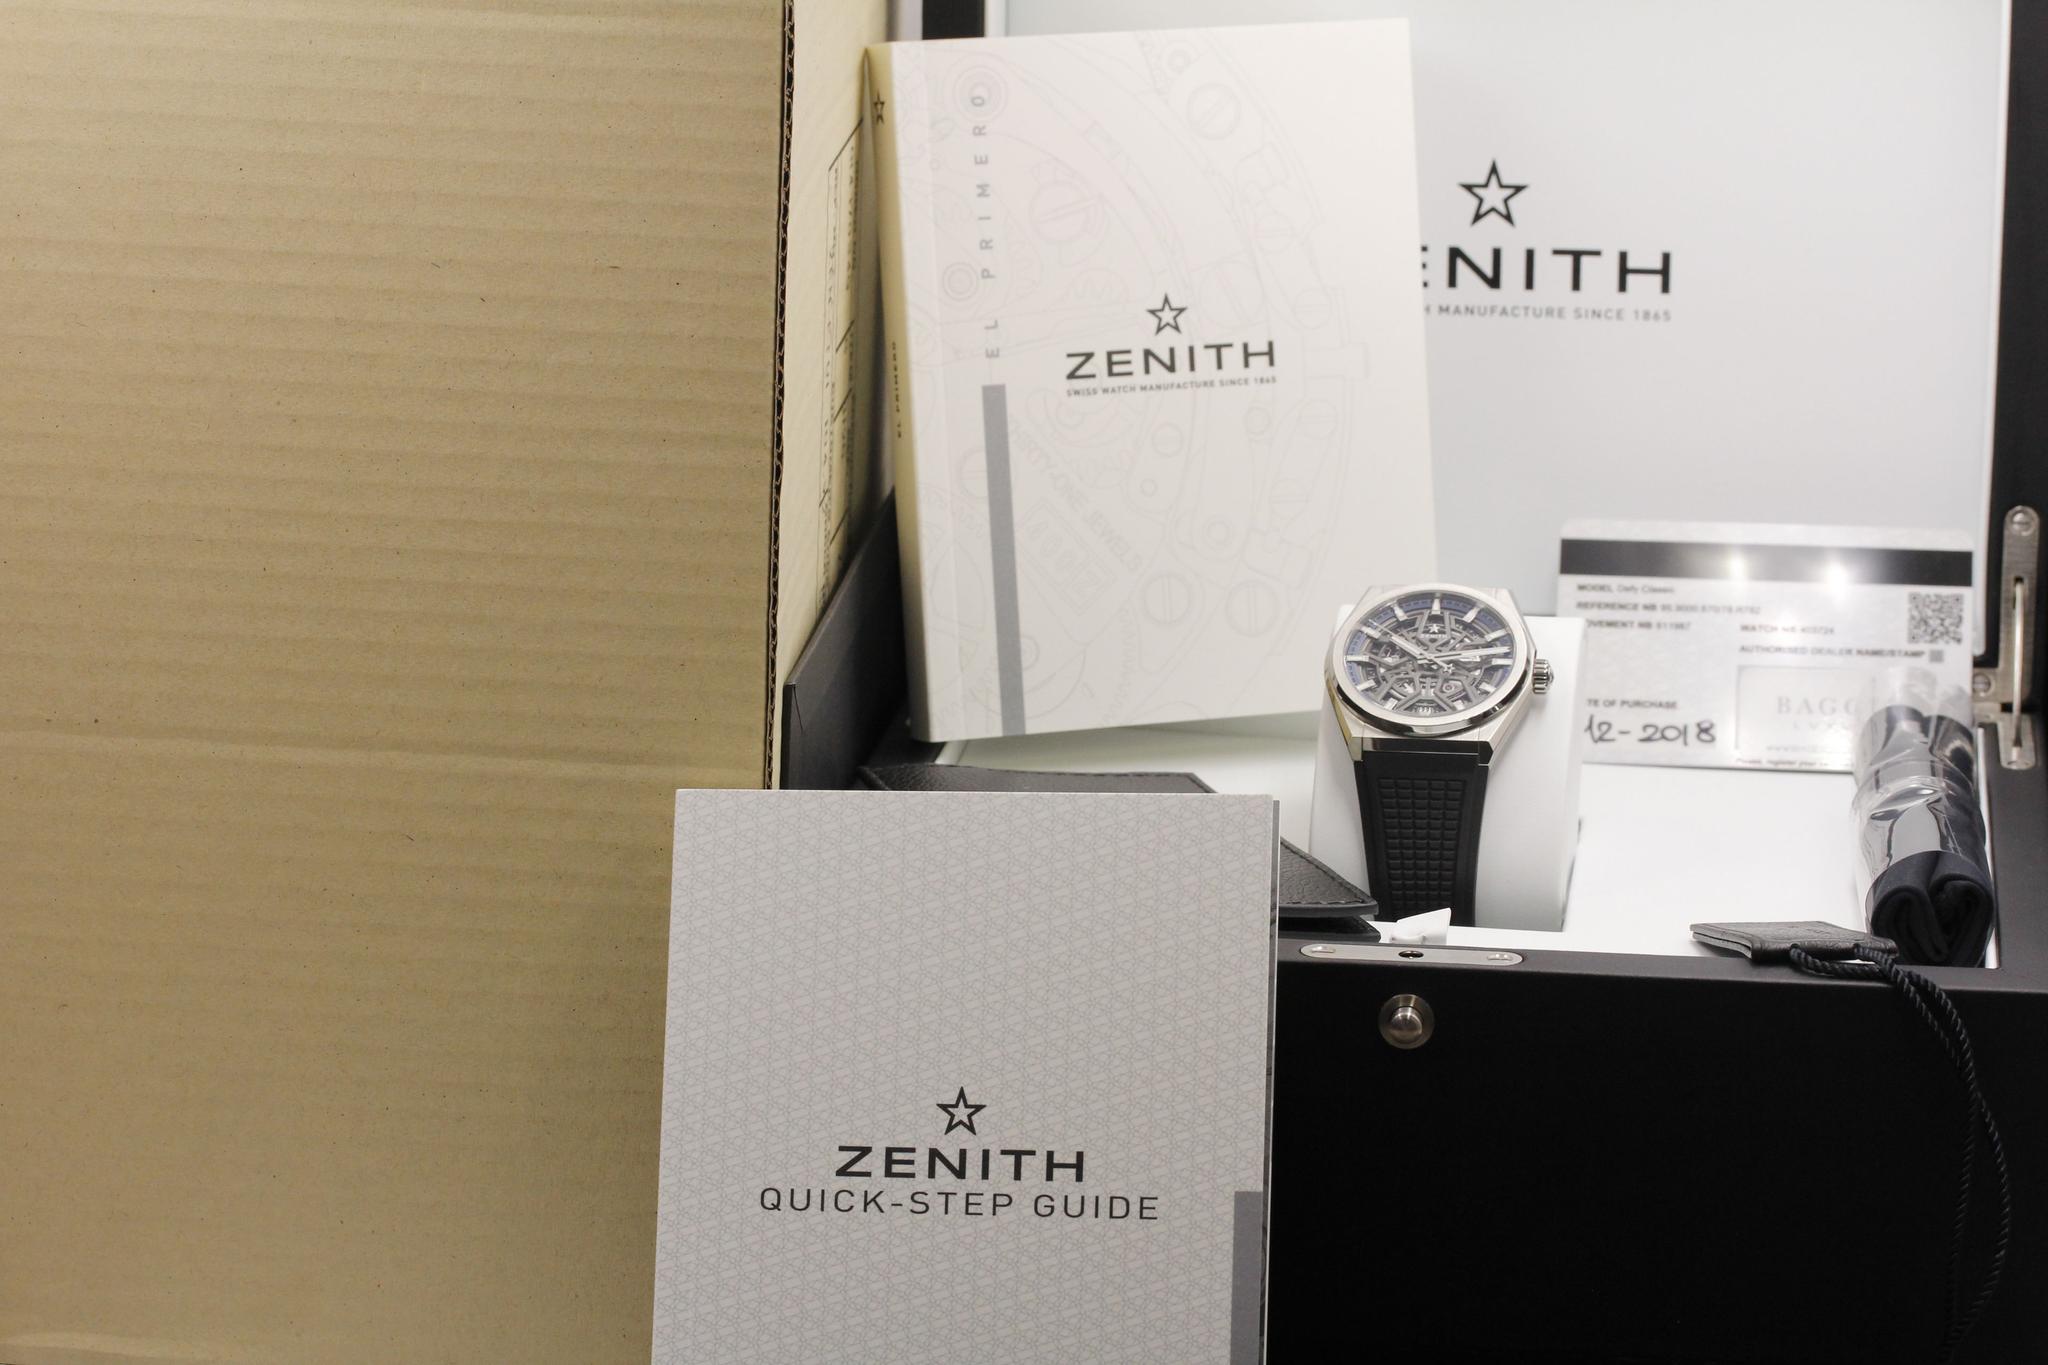 Zenith Defy Classic Automatic Skeletal Dial Titanium Men's Watch  95.9000.670/78.R782 7613061028017 - Watches, Defy Classic - Jomashop